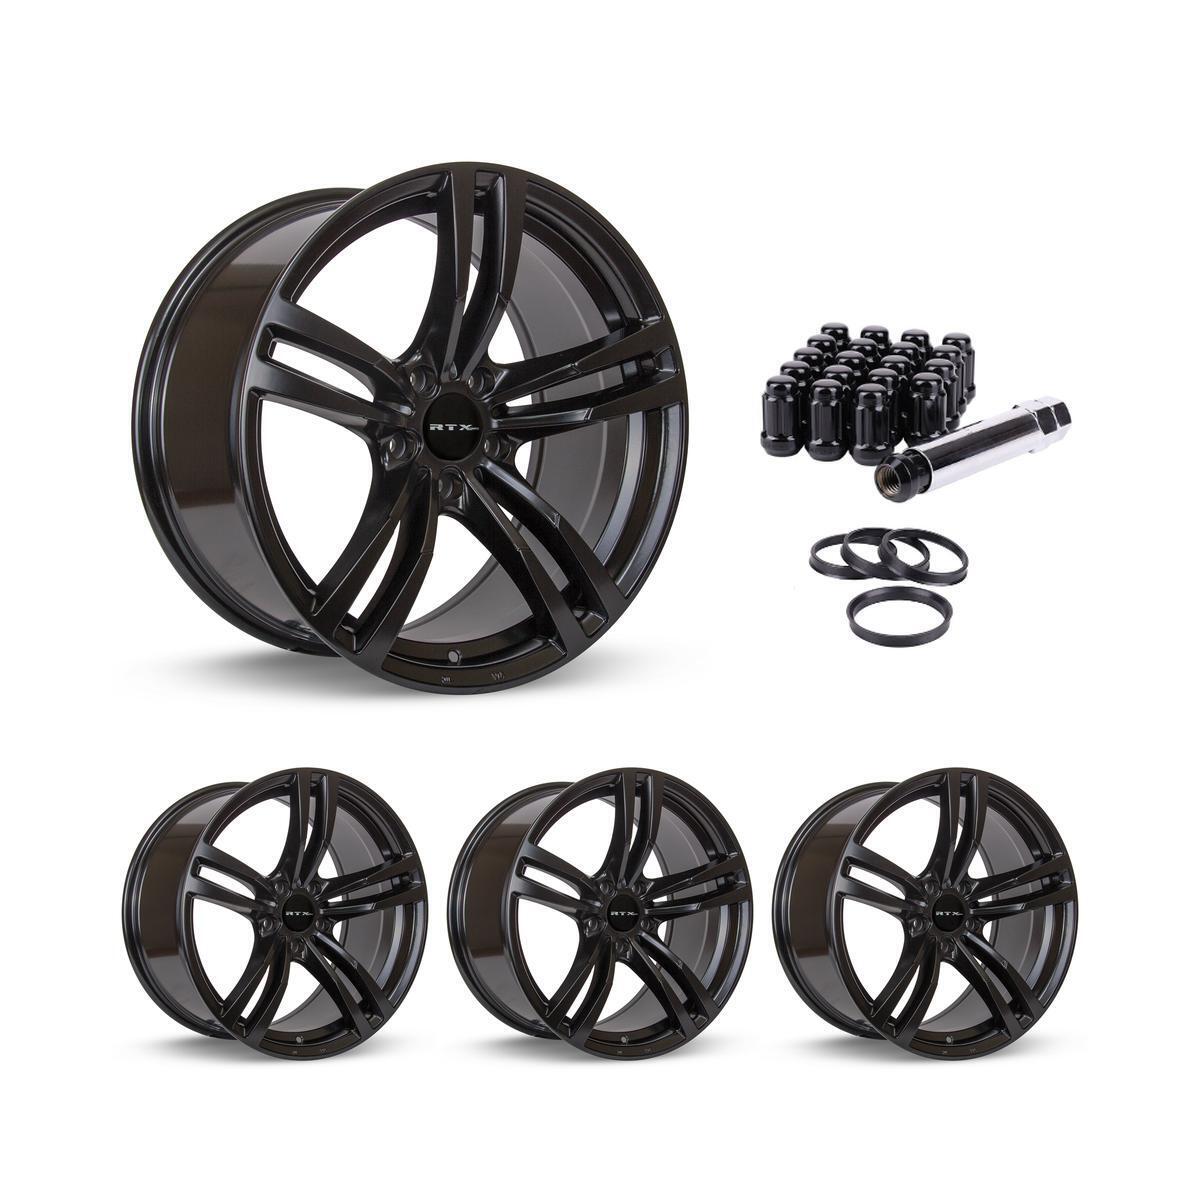 Wheel Rims Set with Black Lug Nuts Kit for 00 BMW 323Ci P829193 18 inch